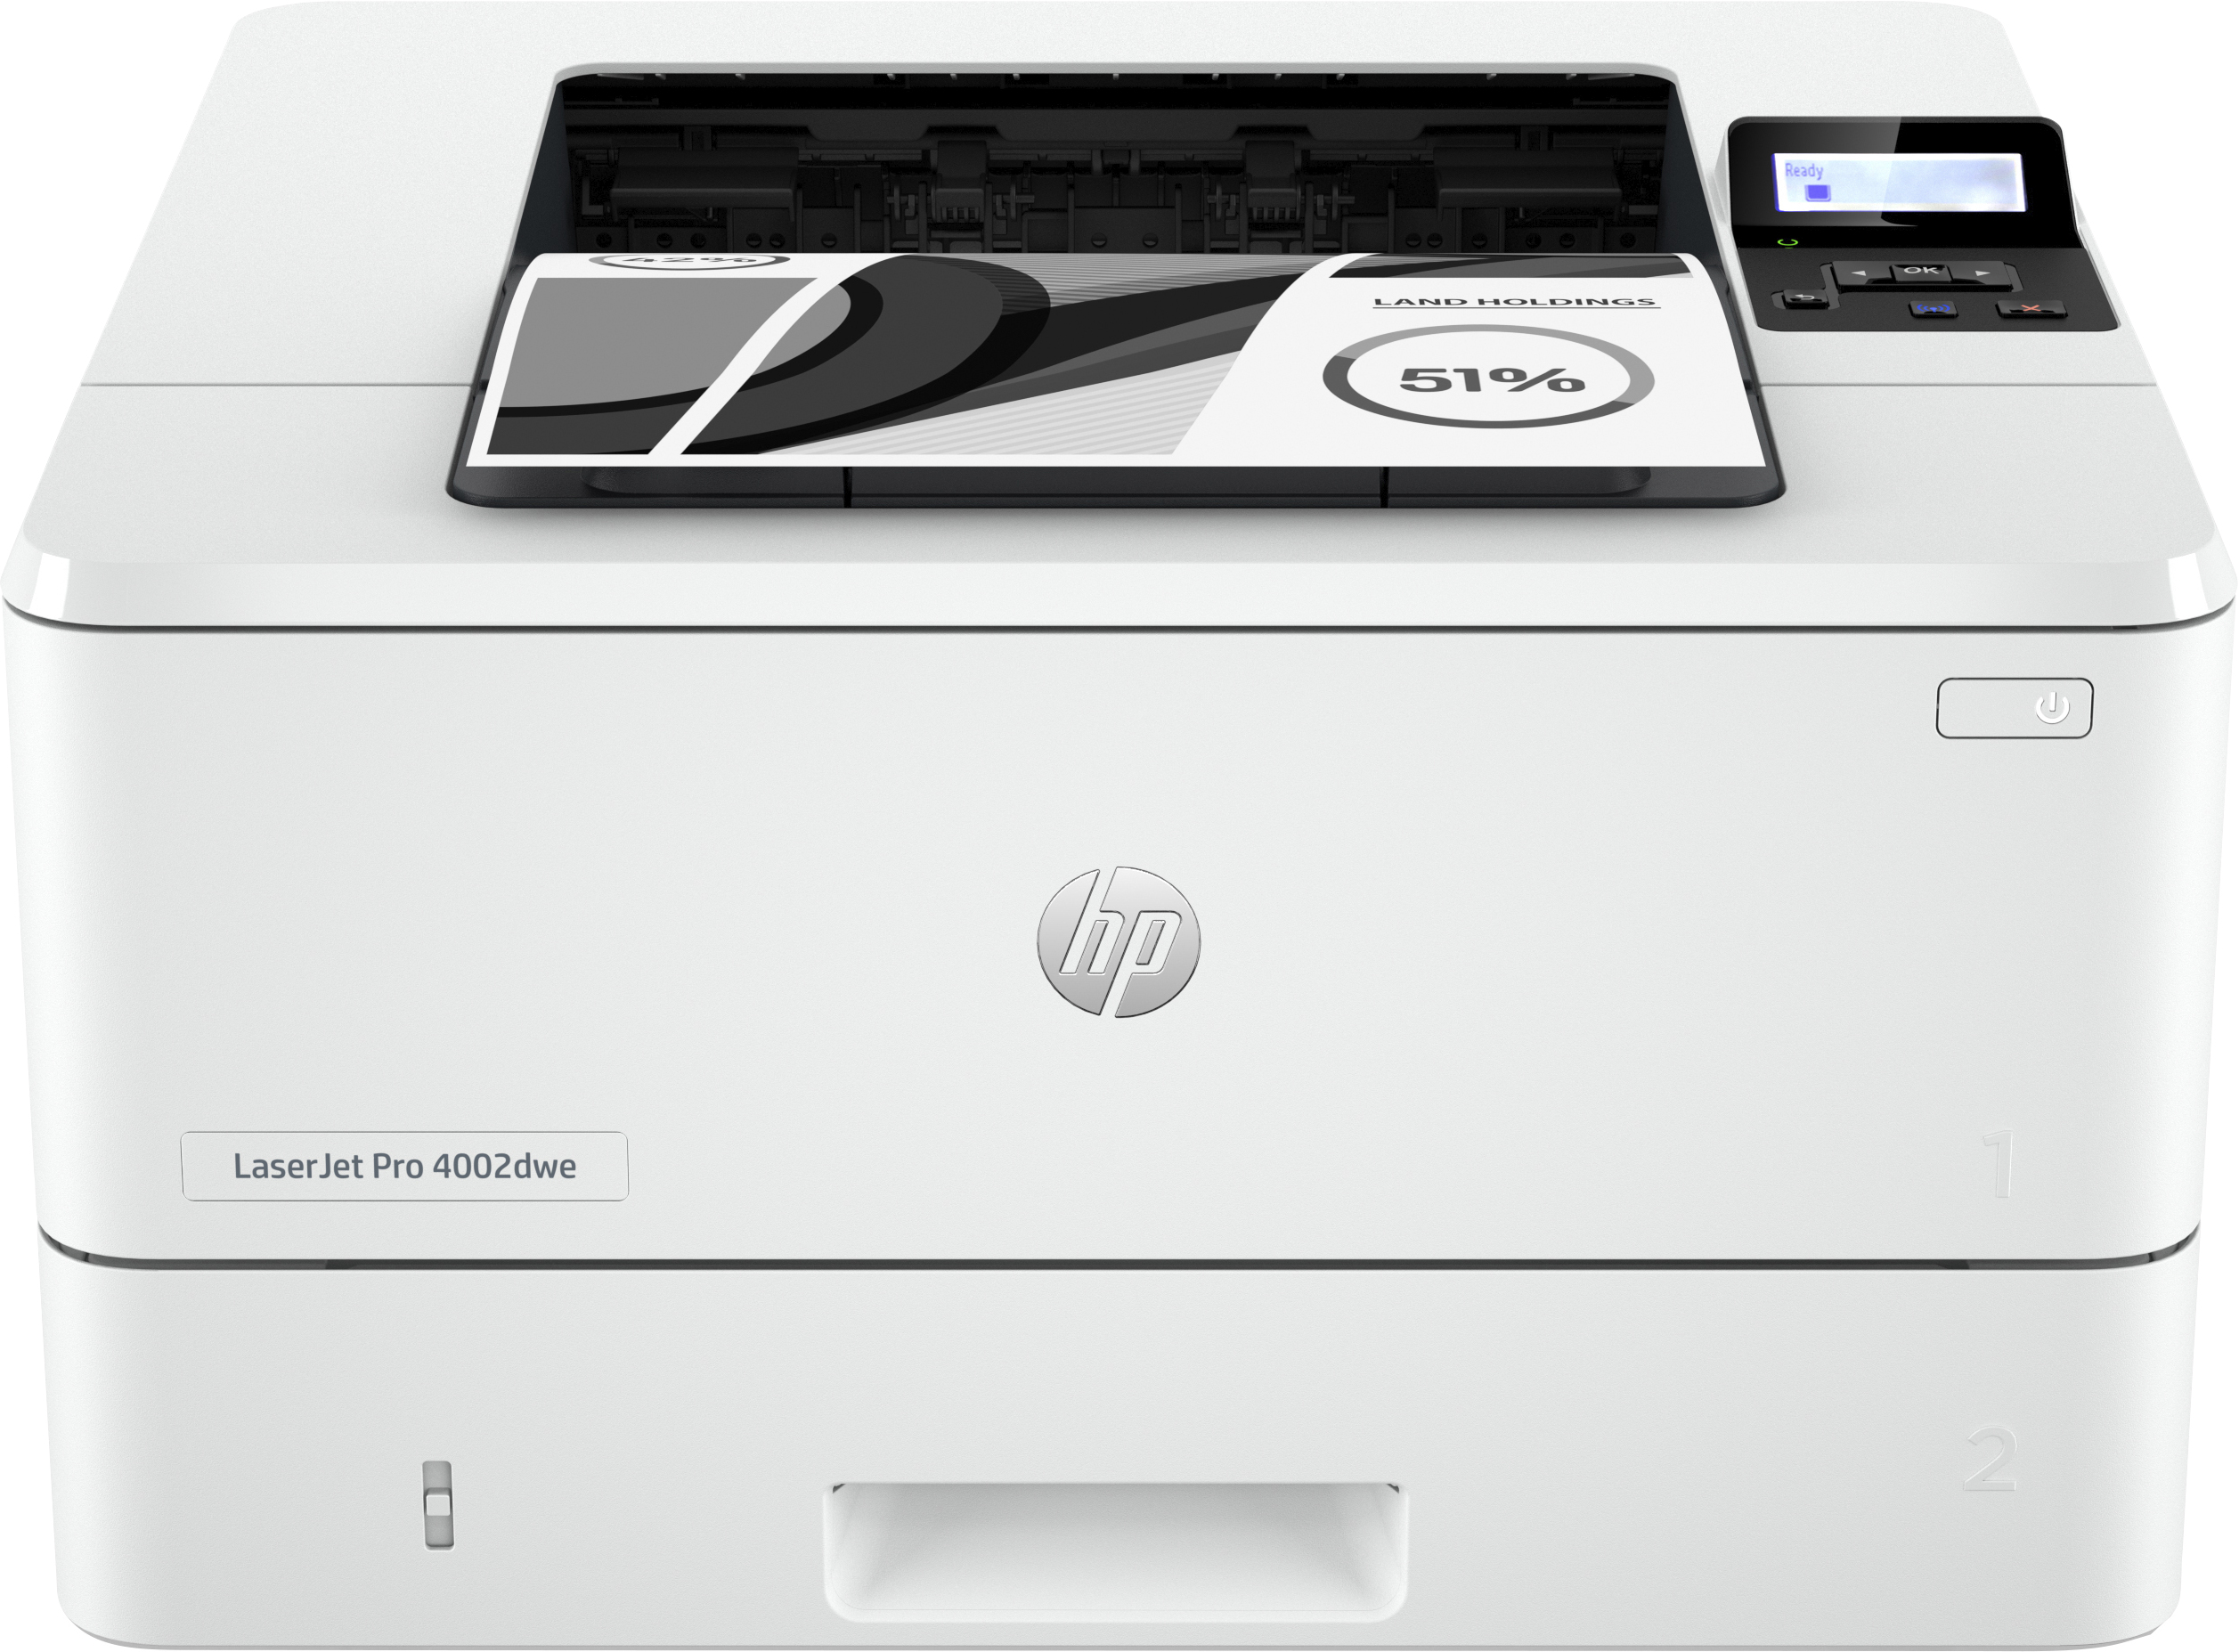 Image of HP LaserJet Pro Stampante HP 4002dwe, Bianco e nero, Stampante per Piccole e medie imprese, Stampa, wireless; HP+; idonea a HP Instant Ink; stampa da smartphone o tablet